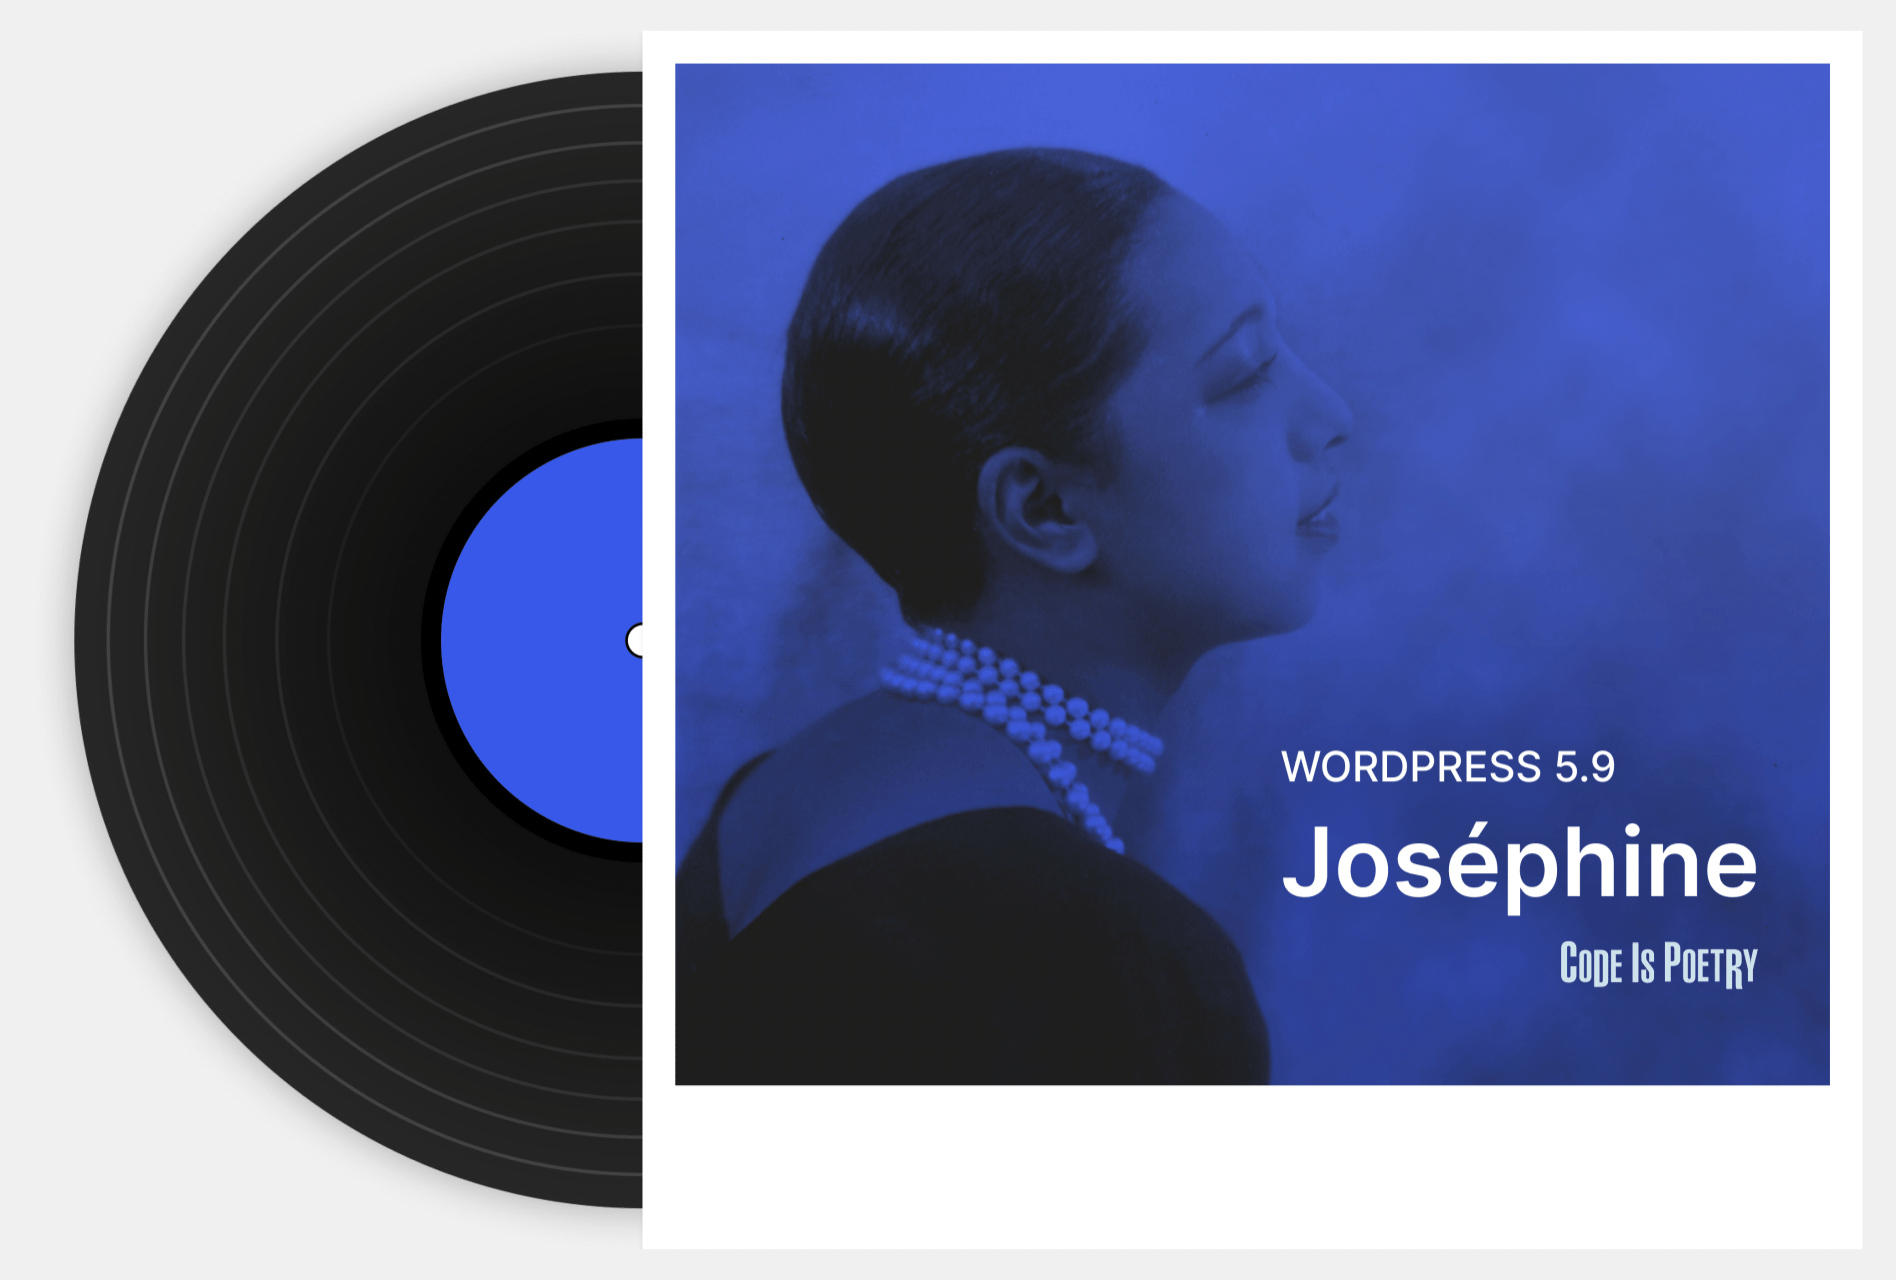 WordPress 5.9, Josephine.